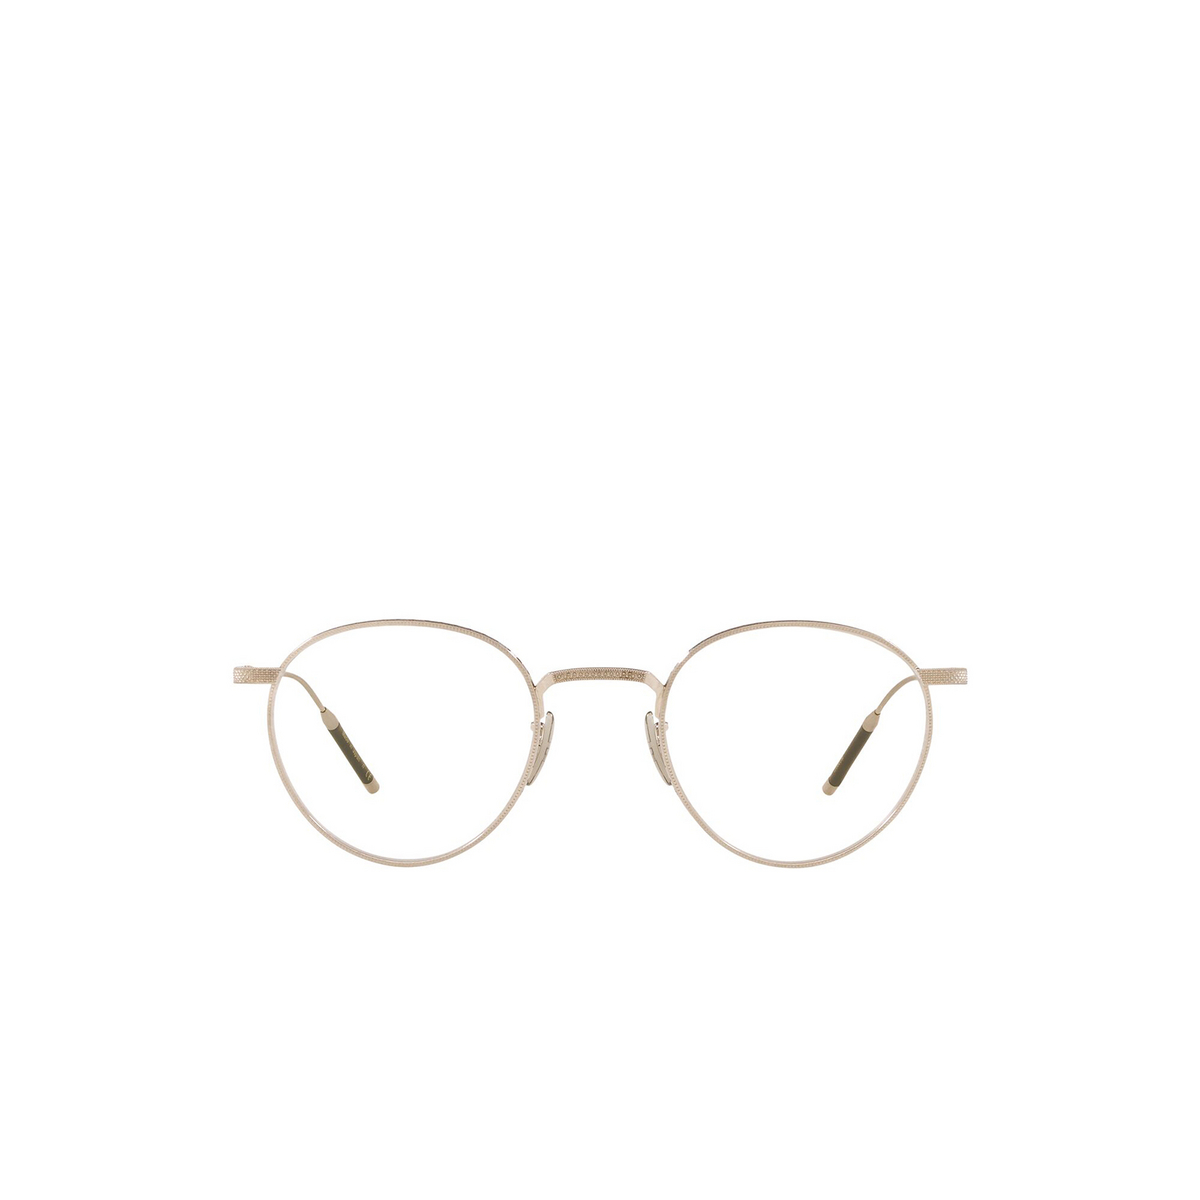 Oliver Peoples® Round Eyeglasses: Tk-1 OV1274T color Brushed Silver 5254 - front view.